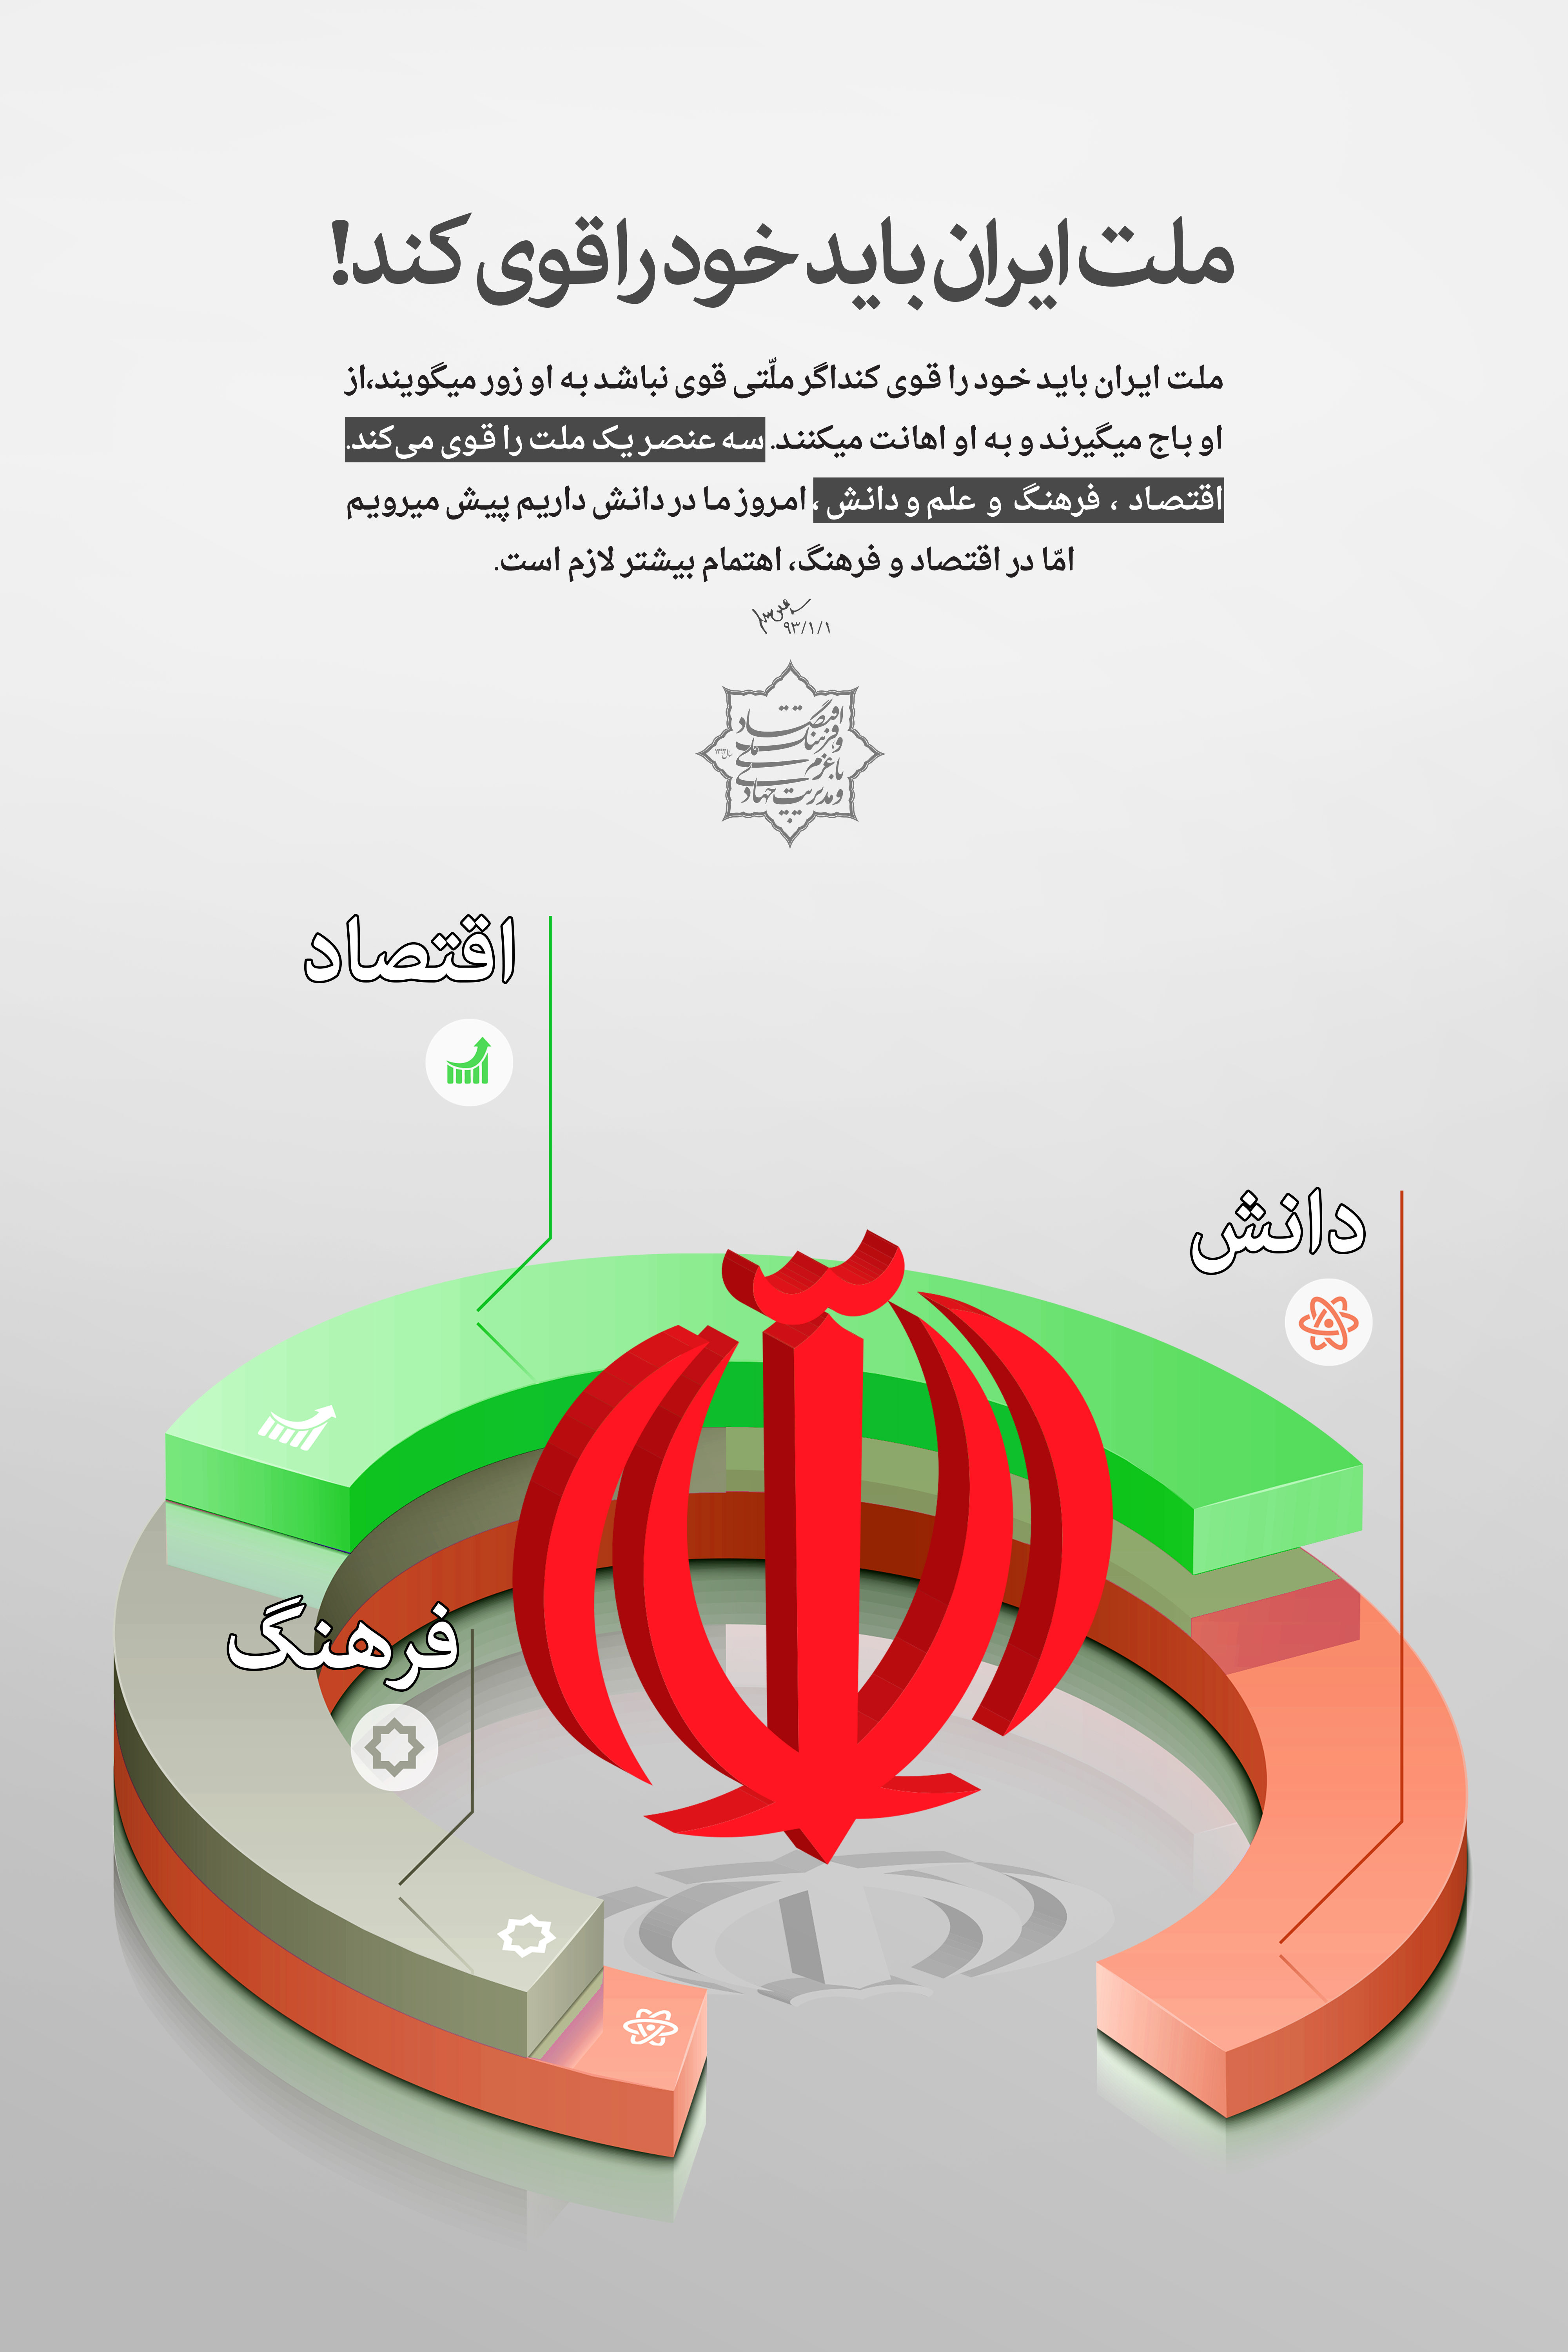 http://farsi.khamenei.ir/ndata/news/26000/B/13930102_0126000.jpg